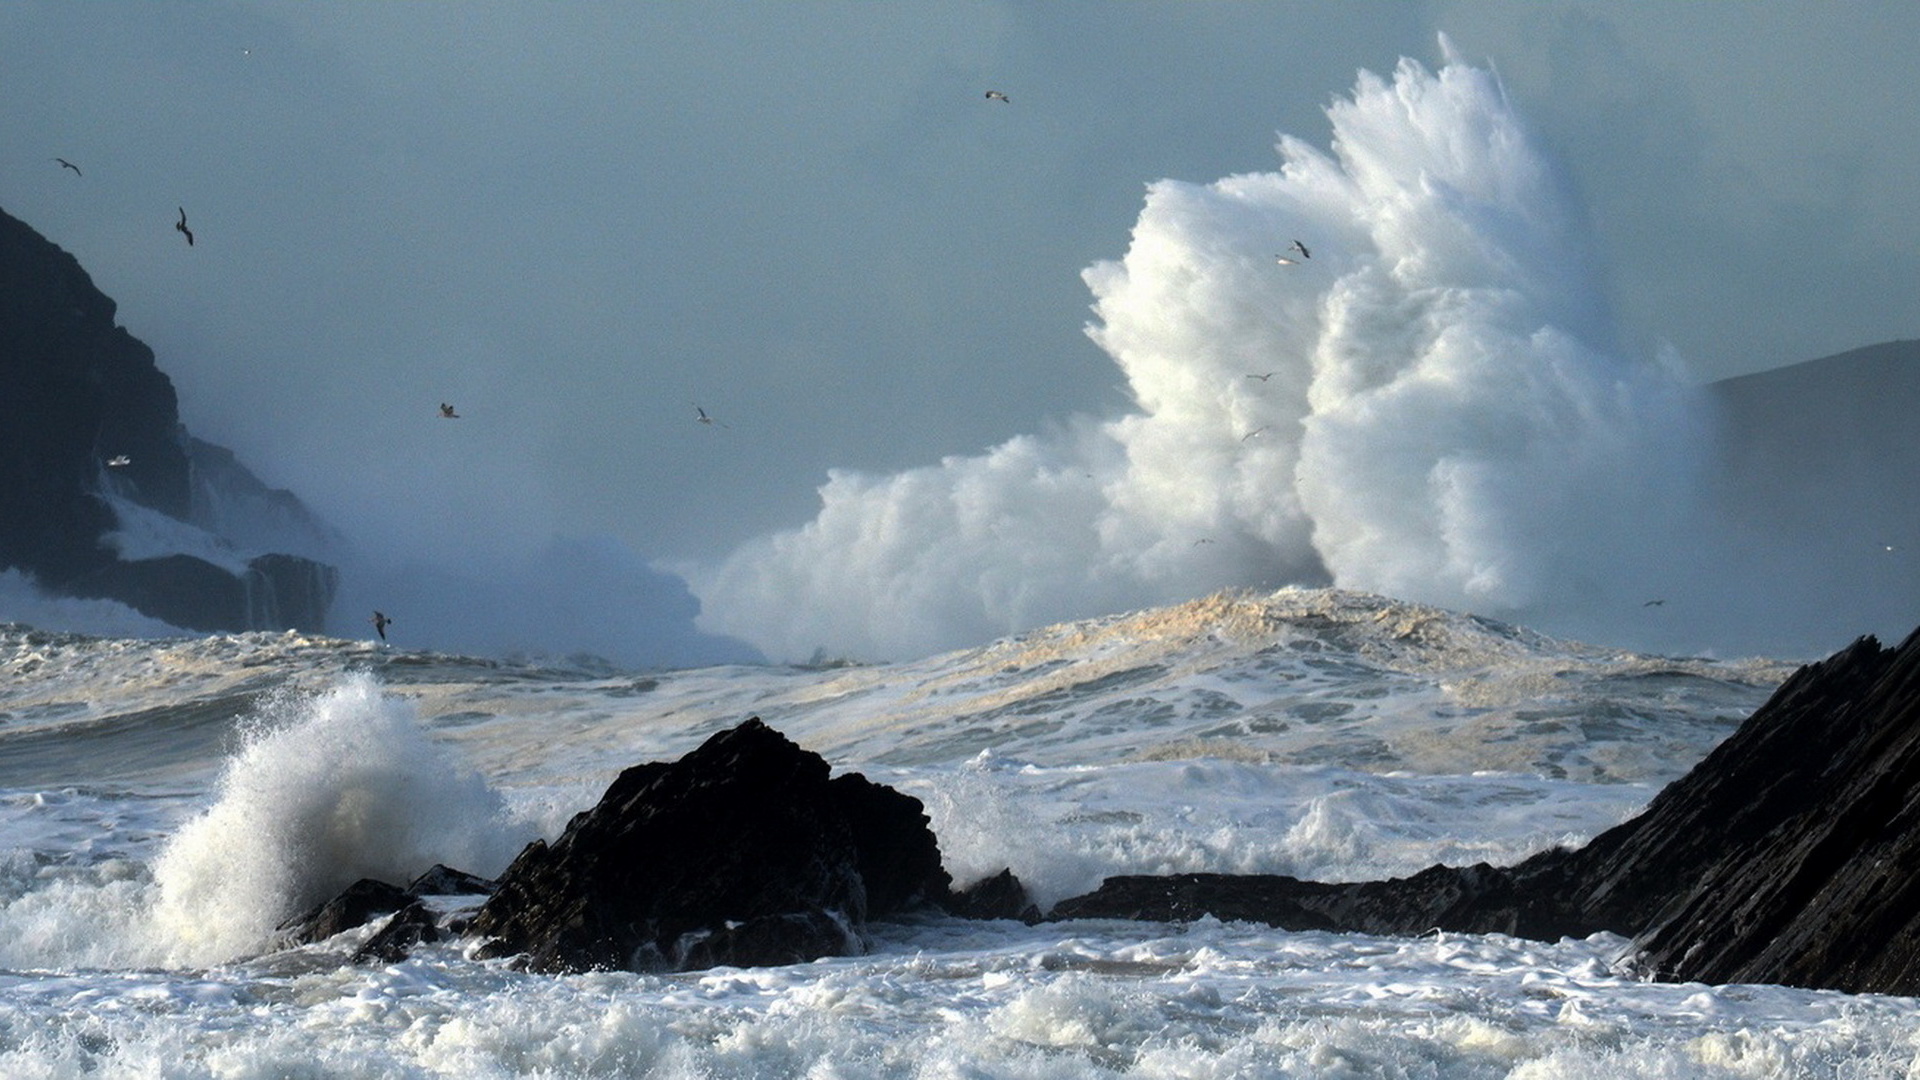 Типы штормов. Генисаретское озеро шторм. Исландия шторм. Сильный шторм. Море шторм.